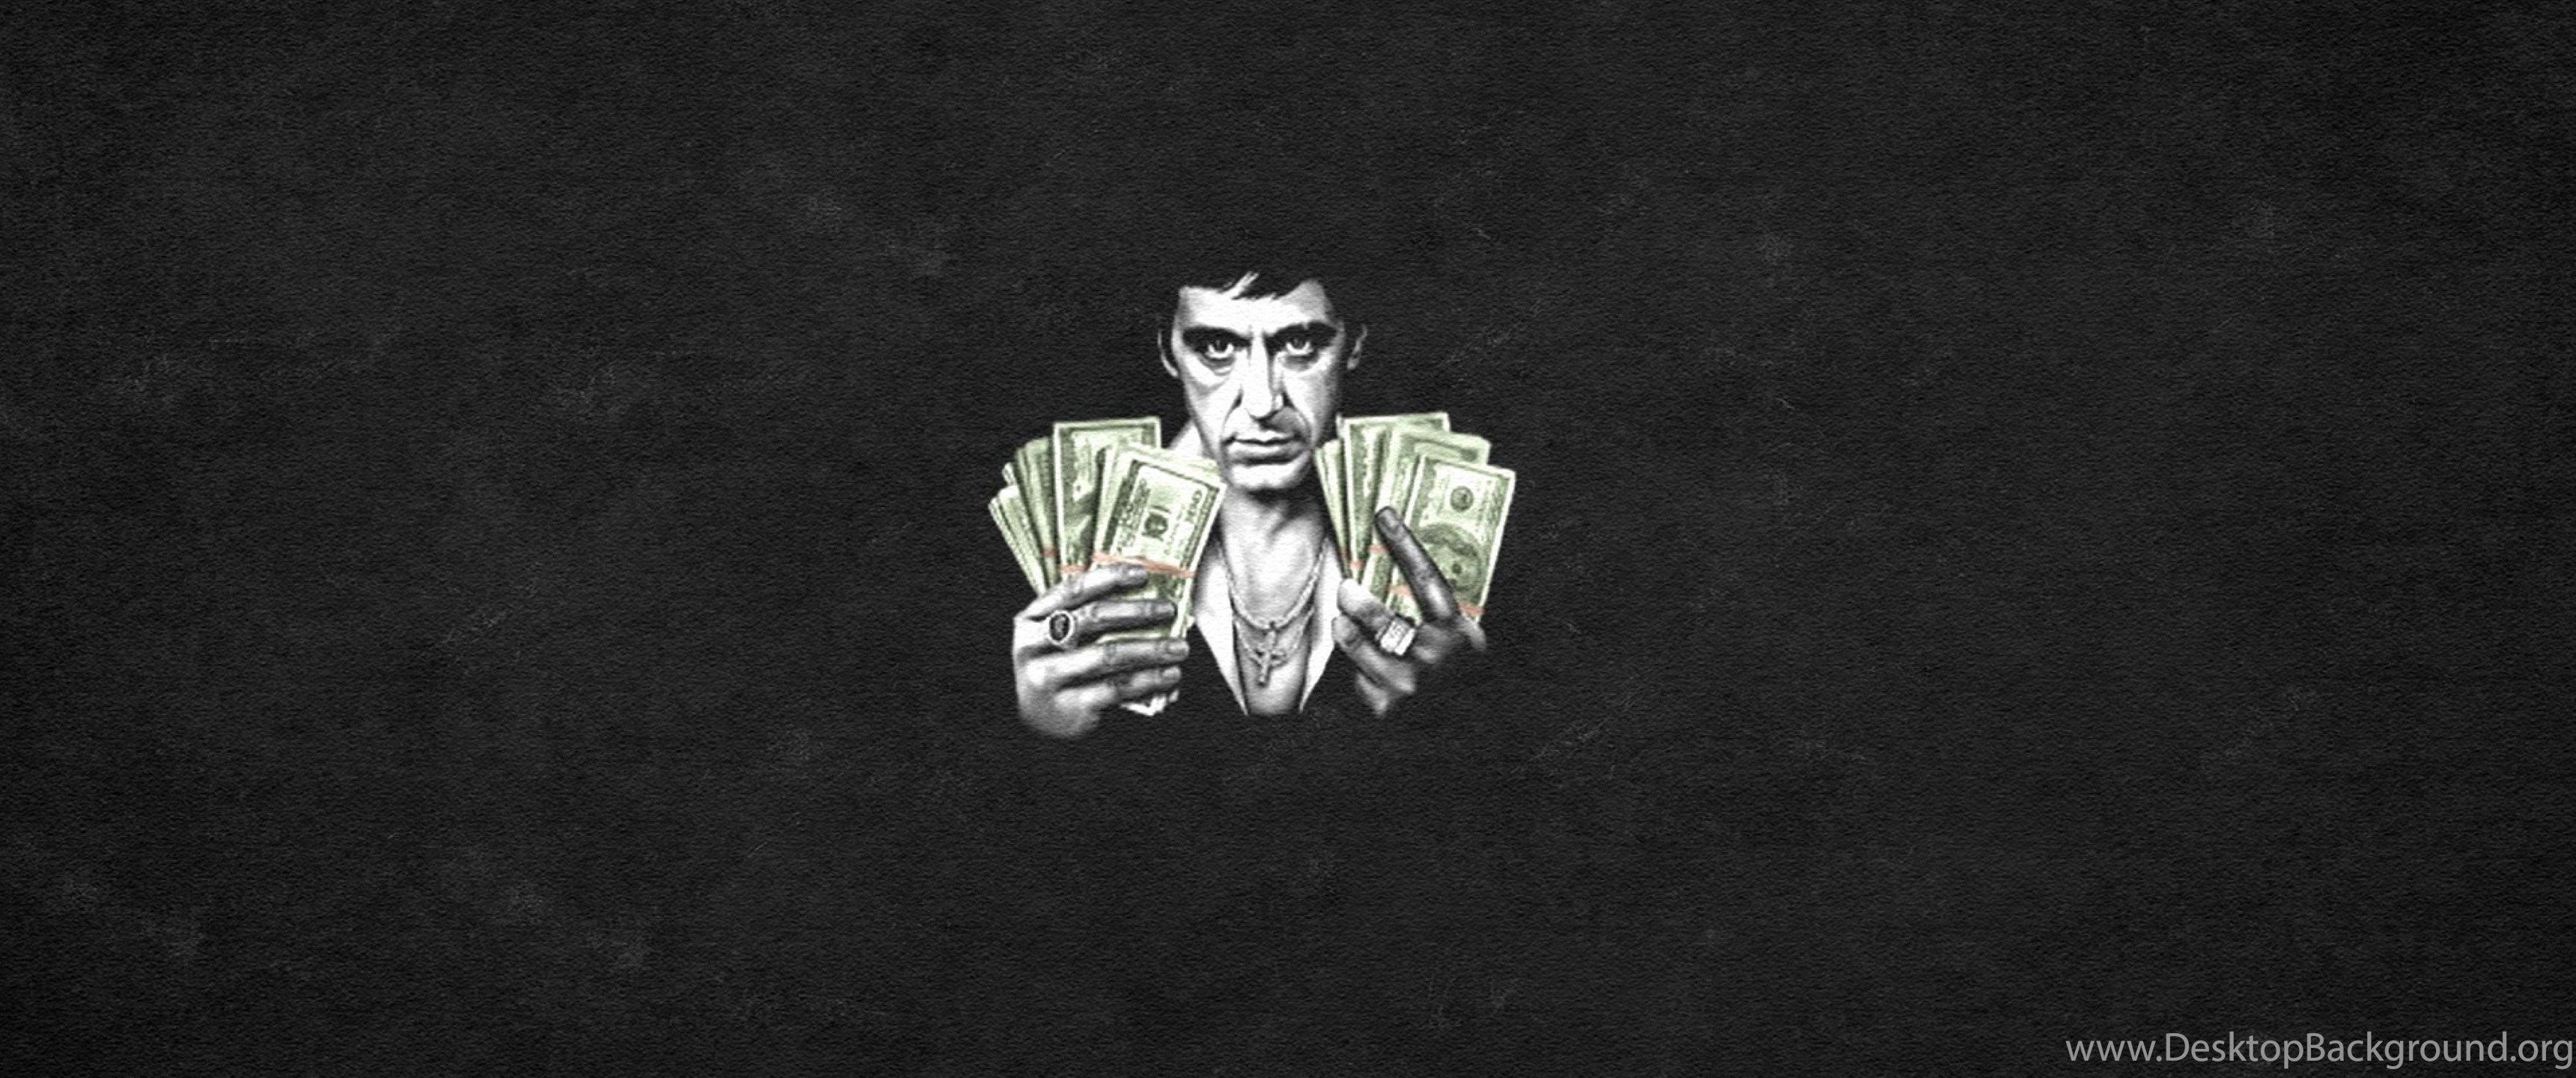 Download Wallpaper 3840x2160 Scarface, Al Pacino, Drawing 4K Ultra. Desktop Background